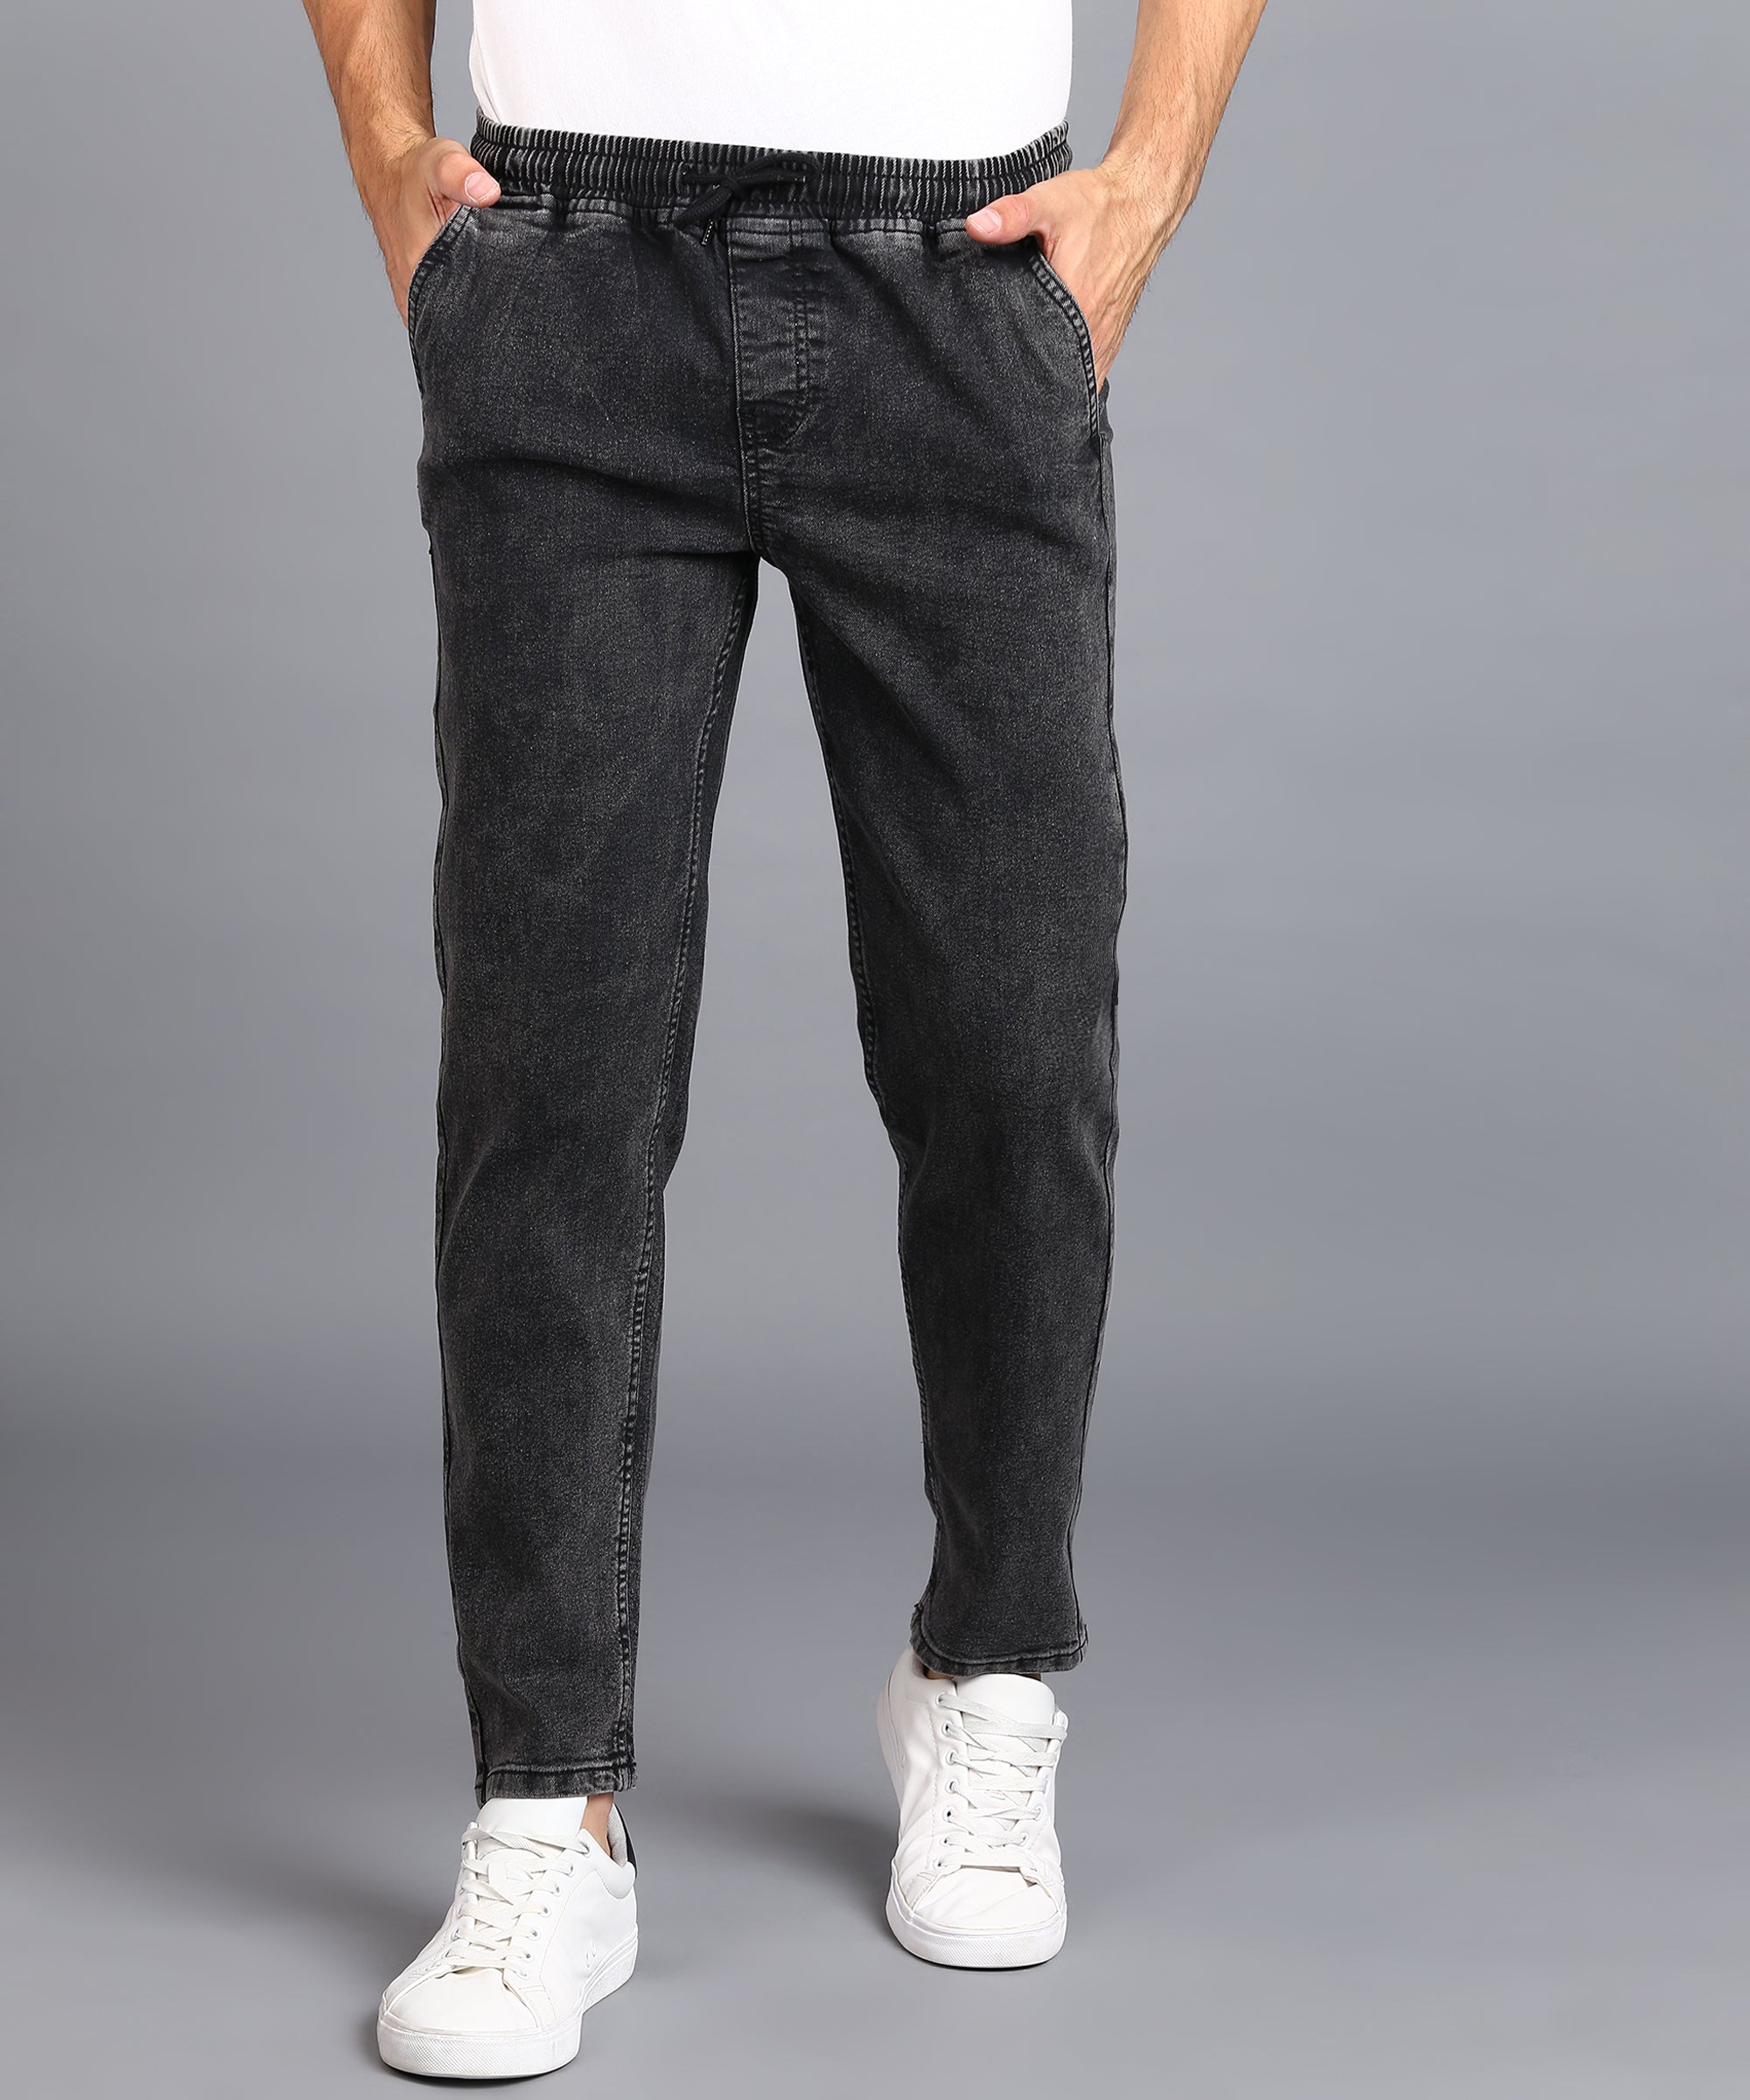 Urbano Fashion Men's Jet Black Regular Fit Washed Jogger Jeans Stretchable